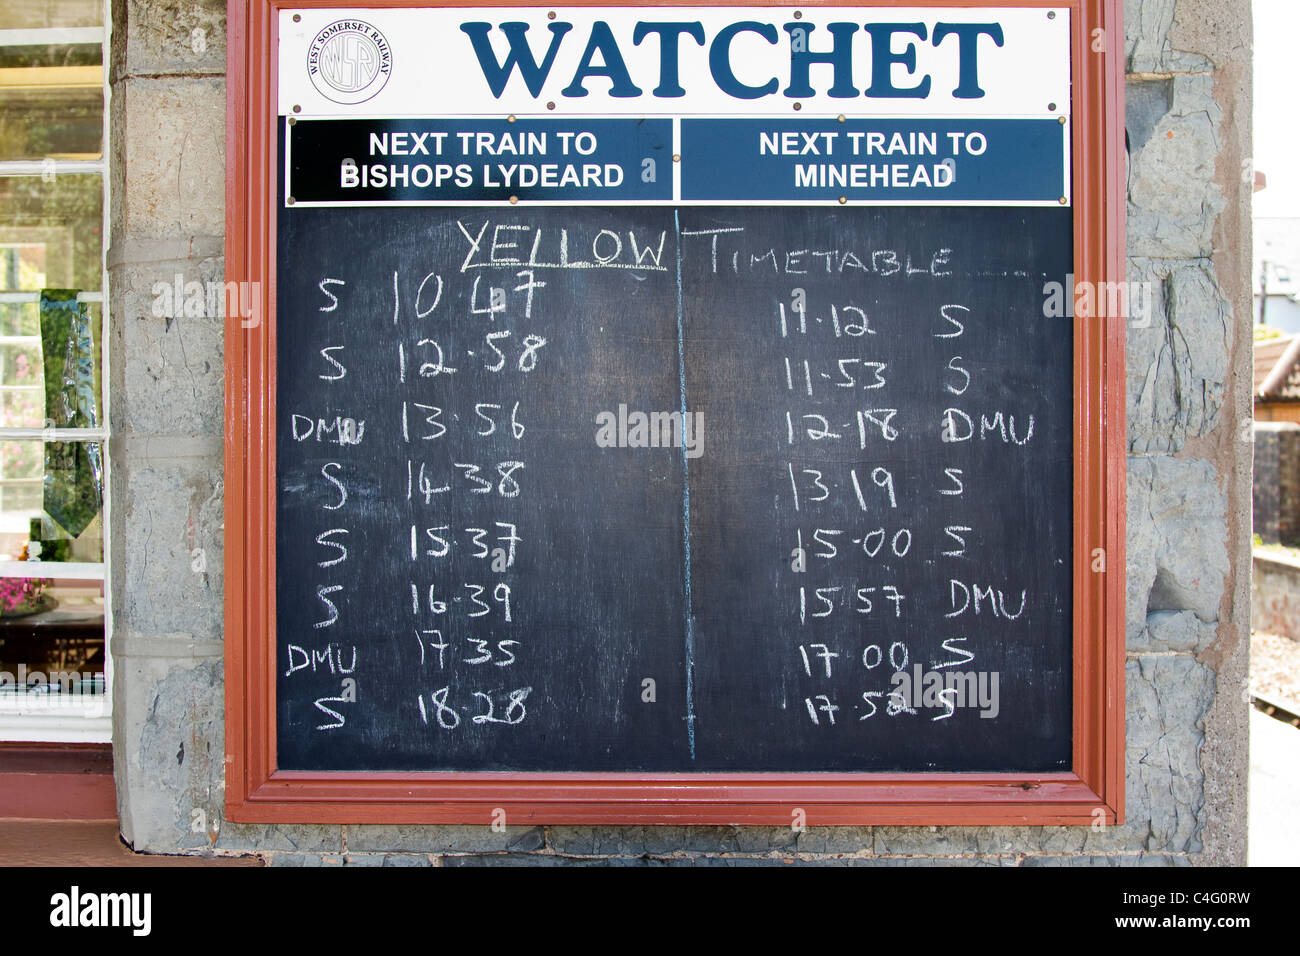 Blackboard of Chalked train times, Watchet Train Timetable, North Devon, England, UK Stock Photo